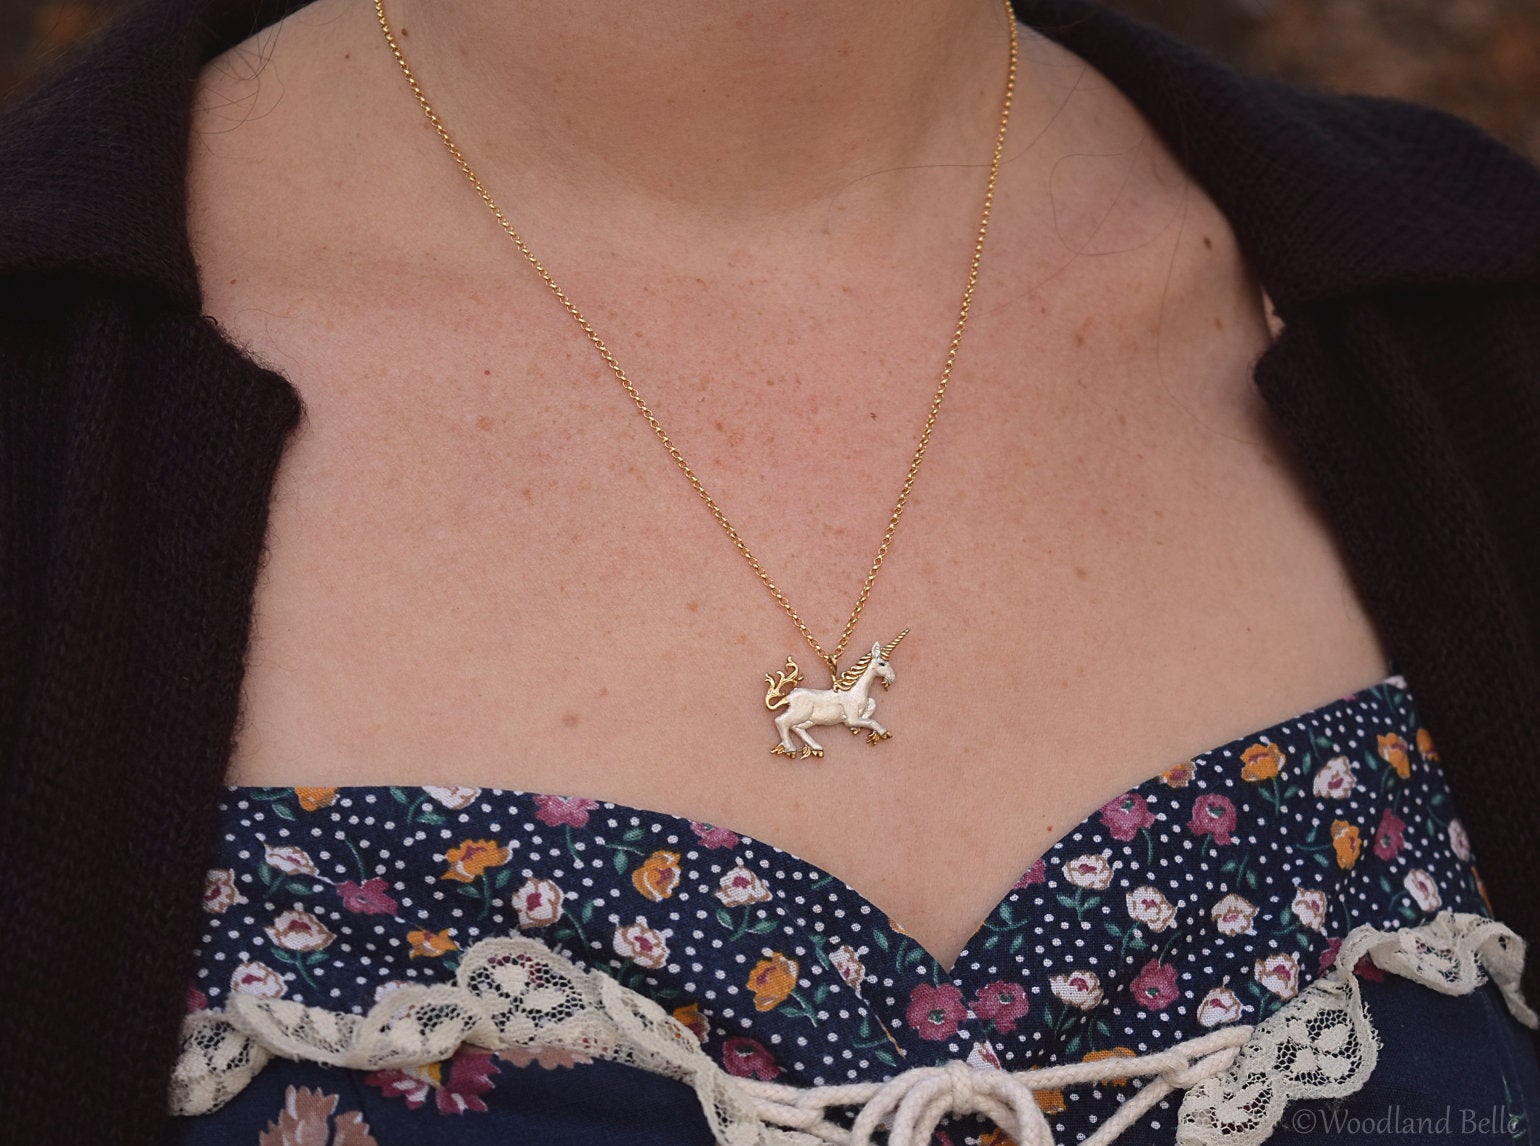 Small Unicorn Necklace